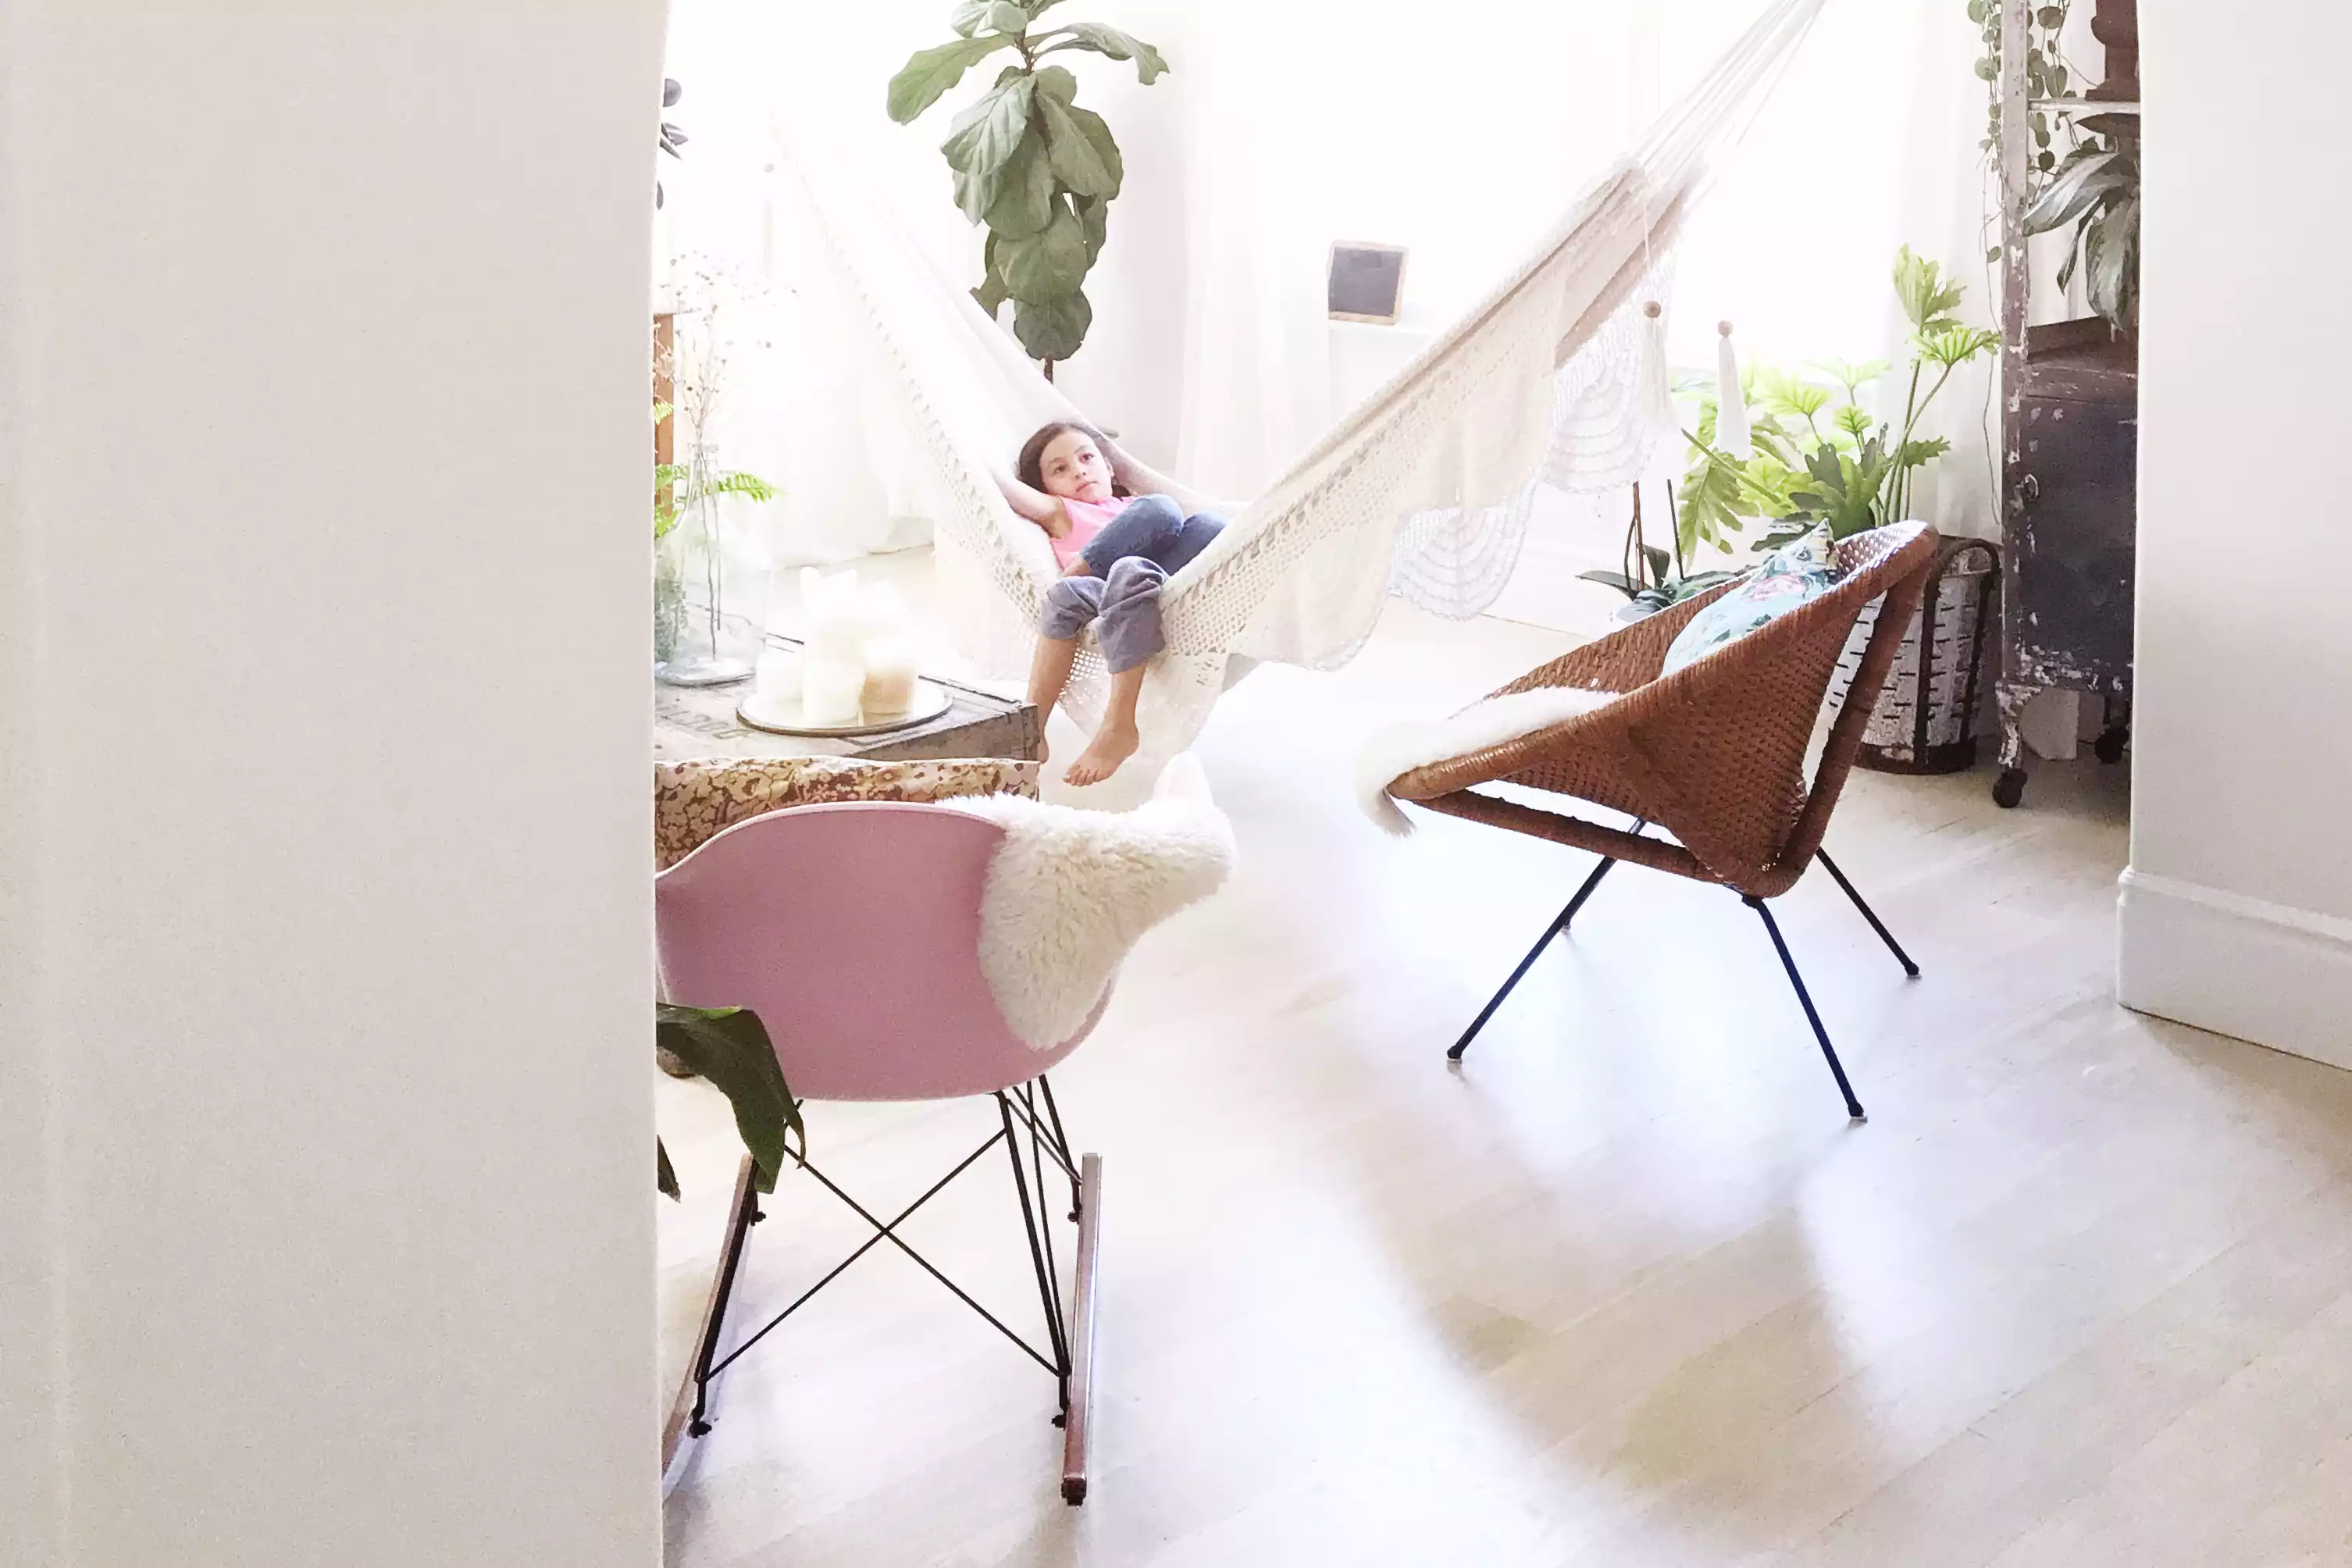 Decorate indoor ideas with hammocks - 71